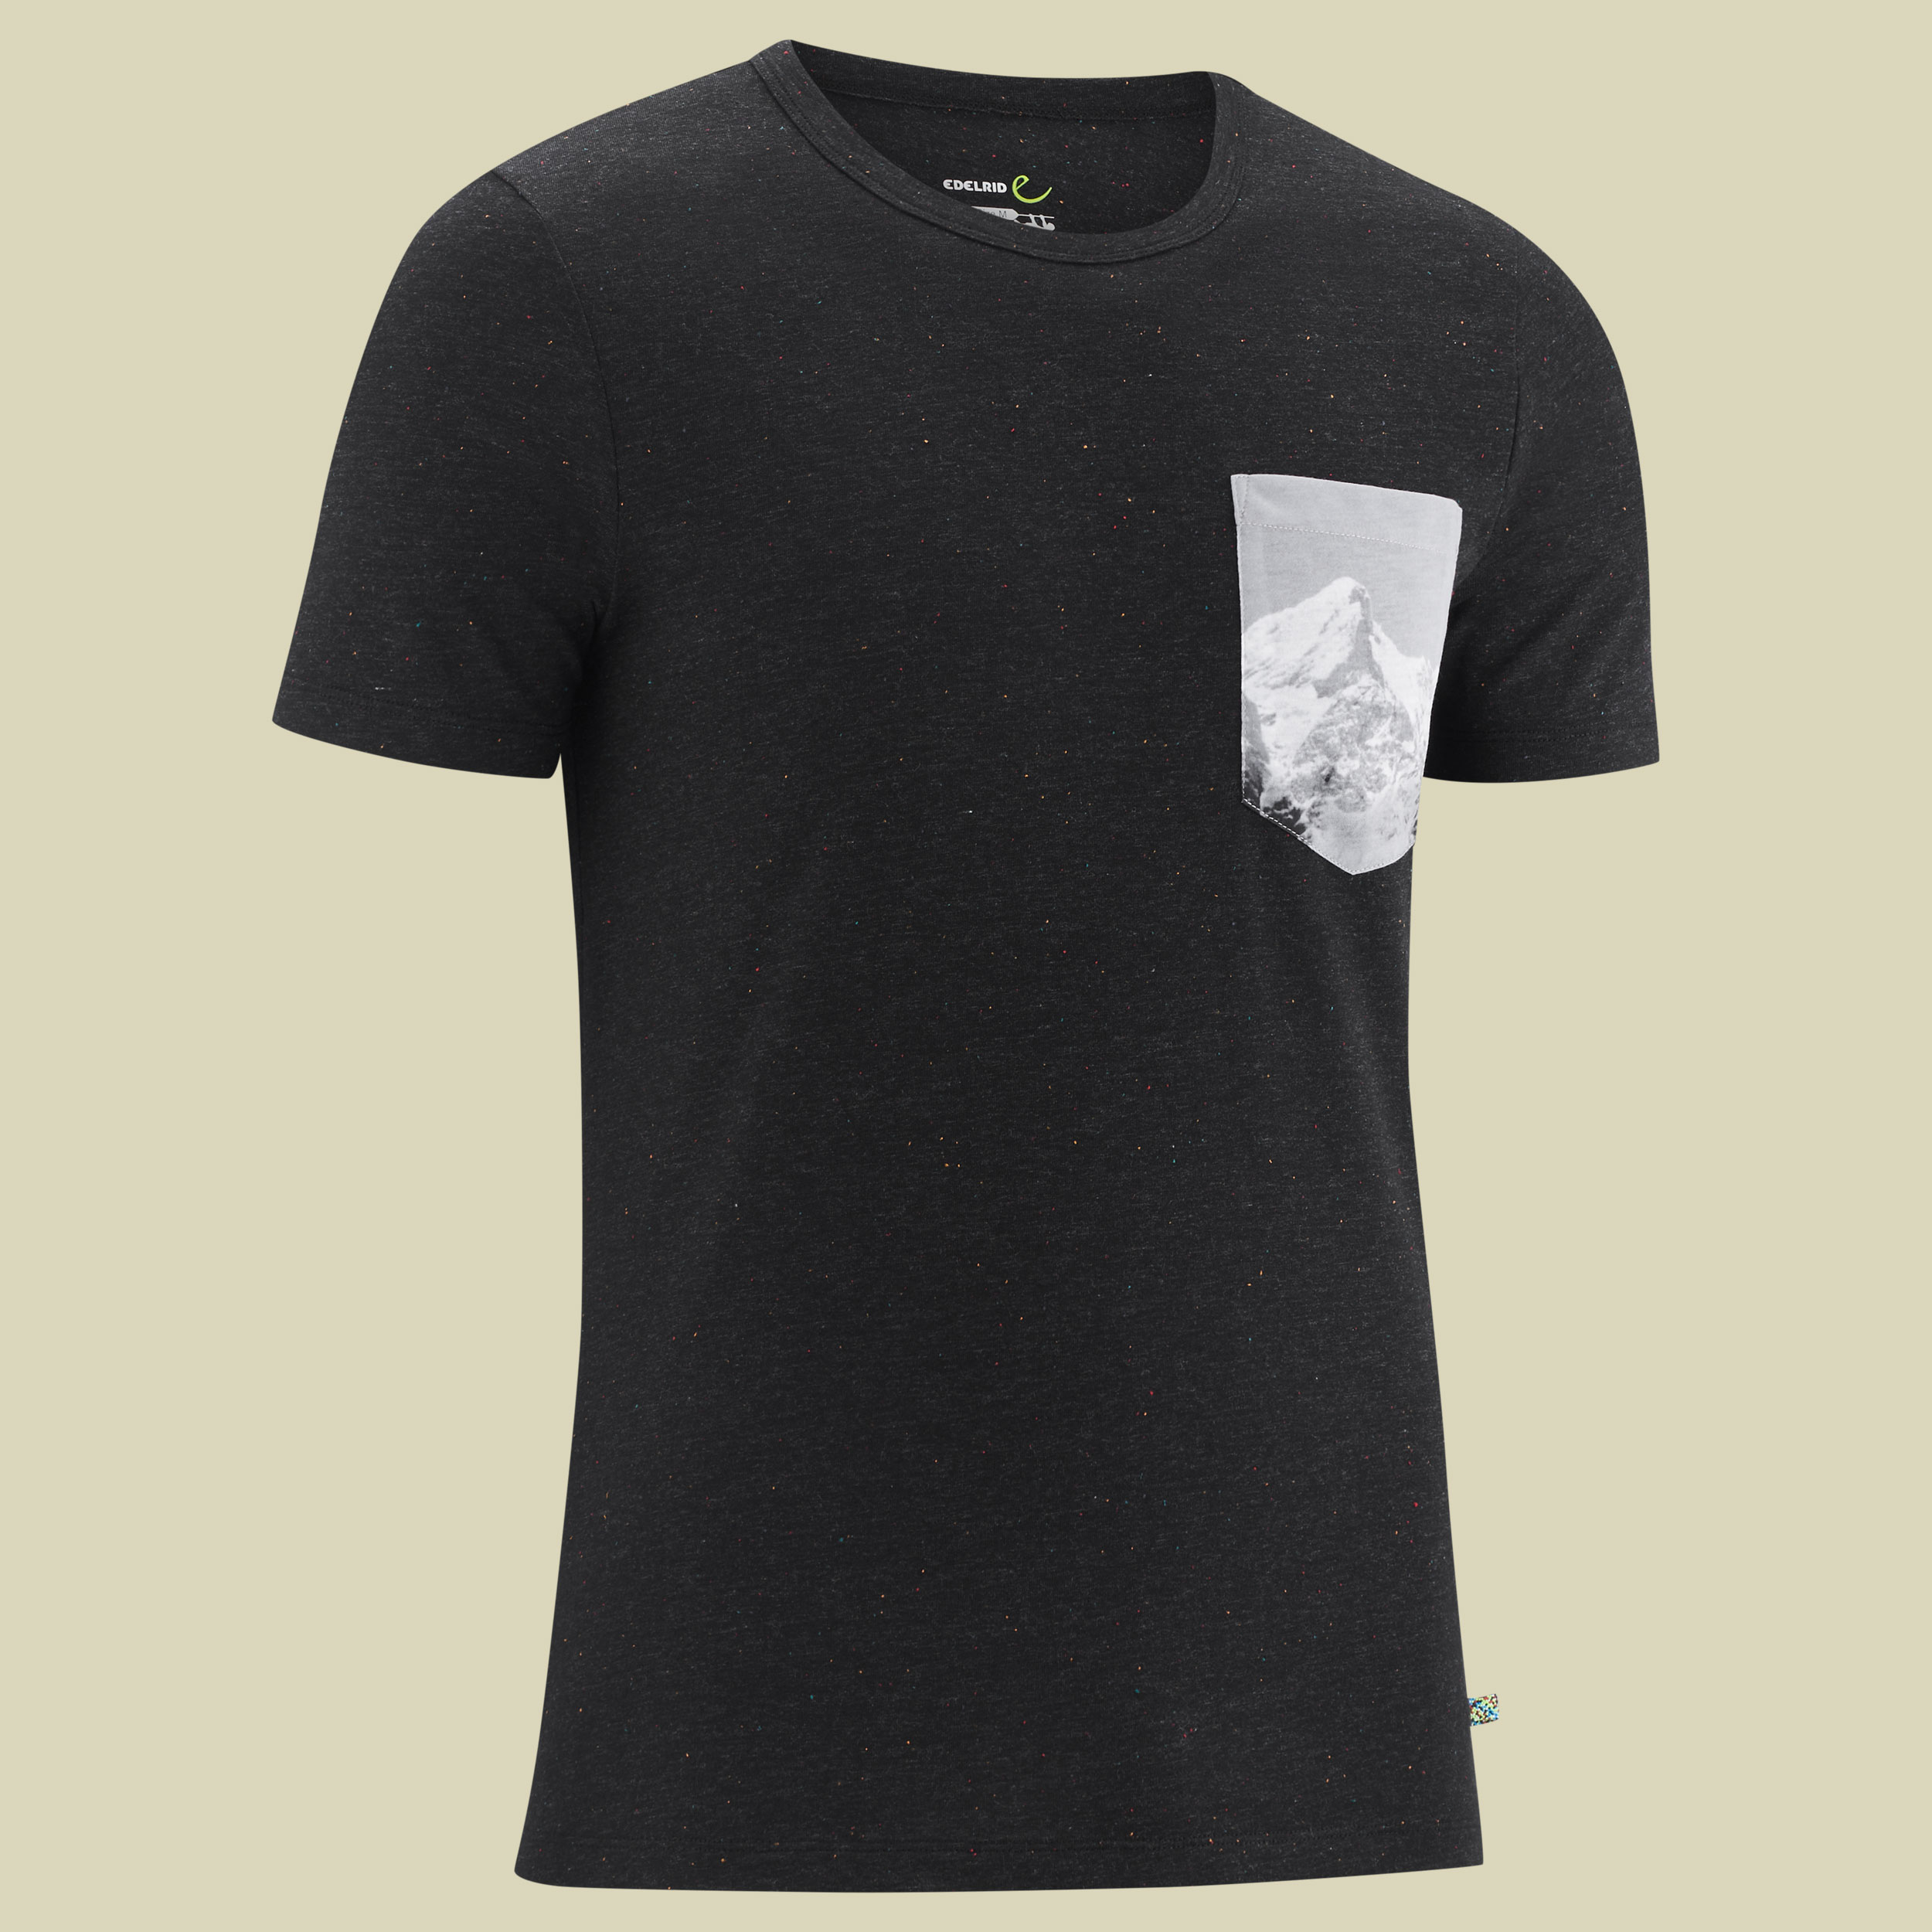 Onset T-Shirt Men S grau - obsidian